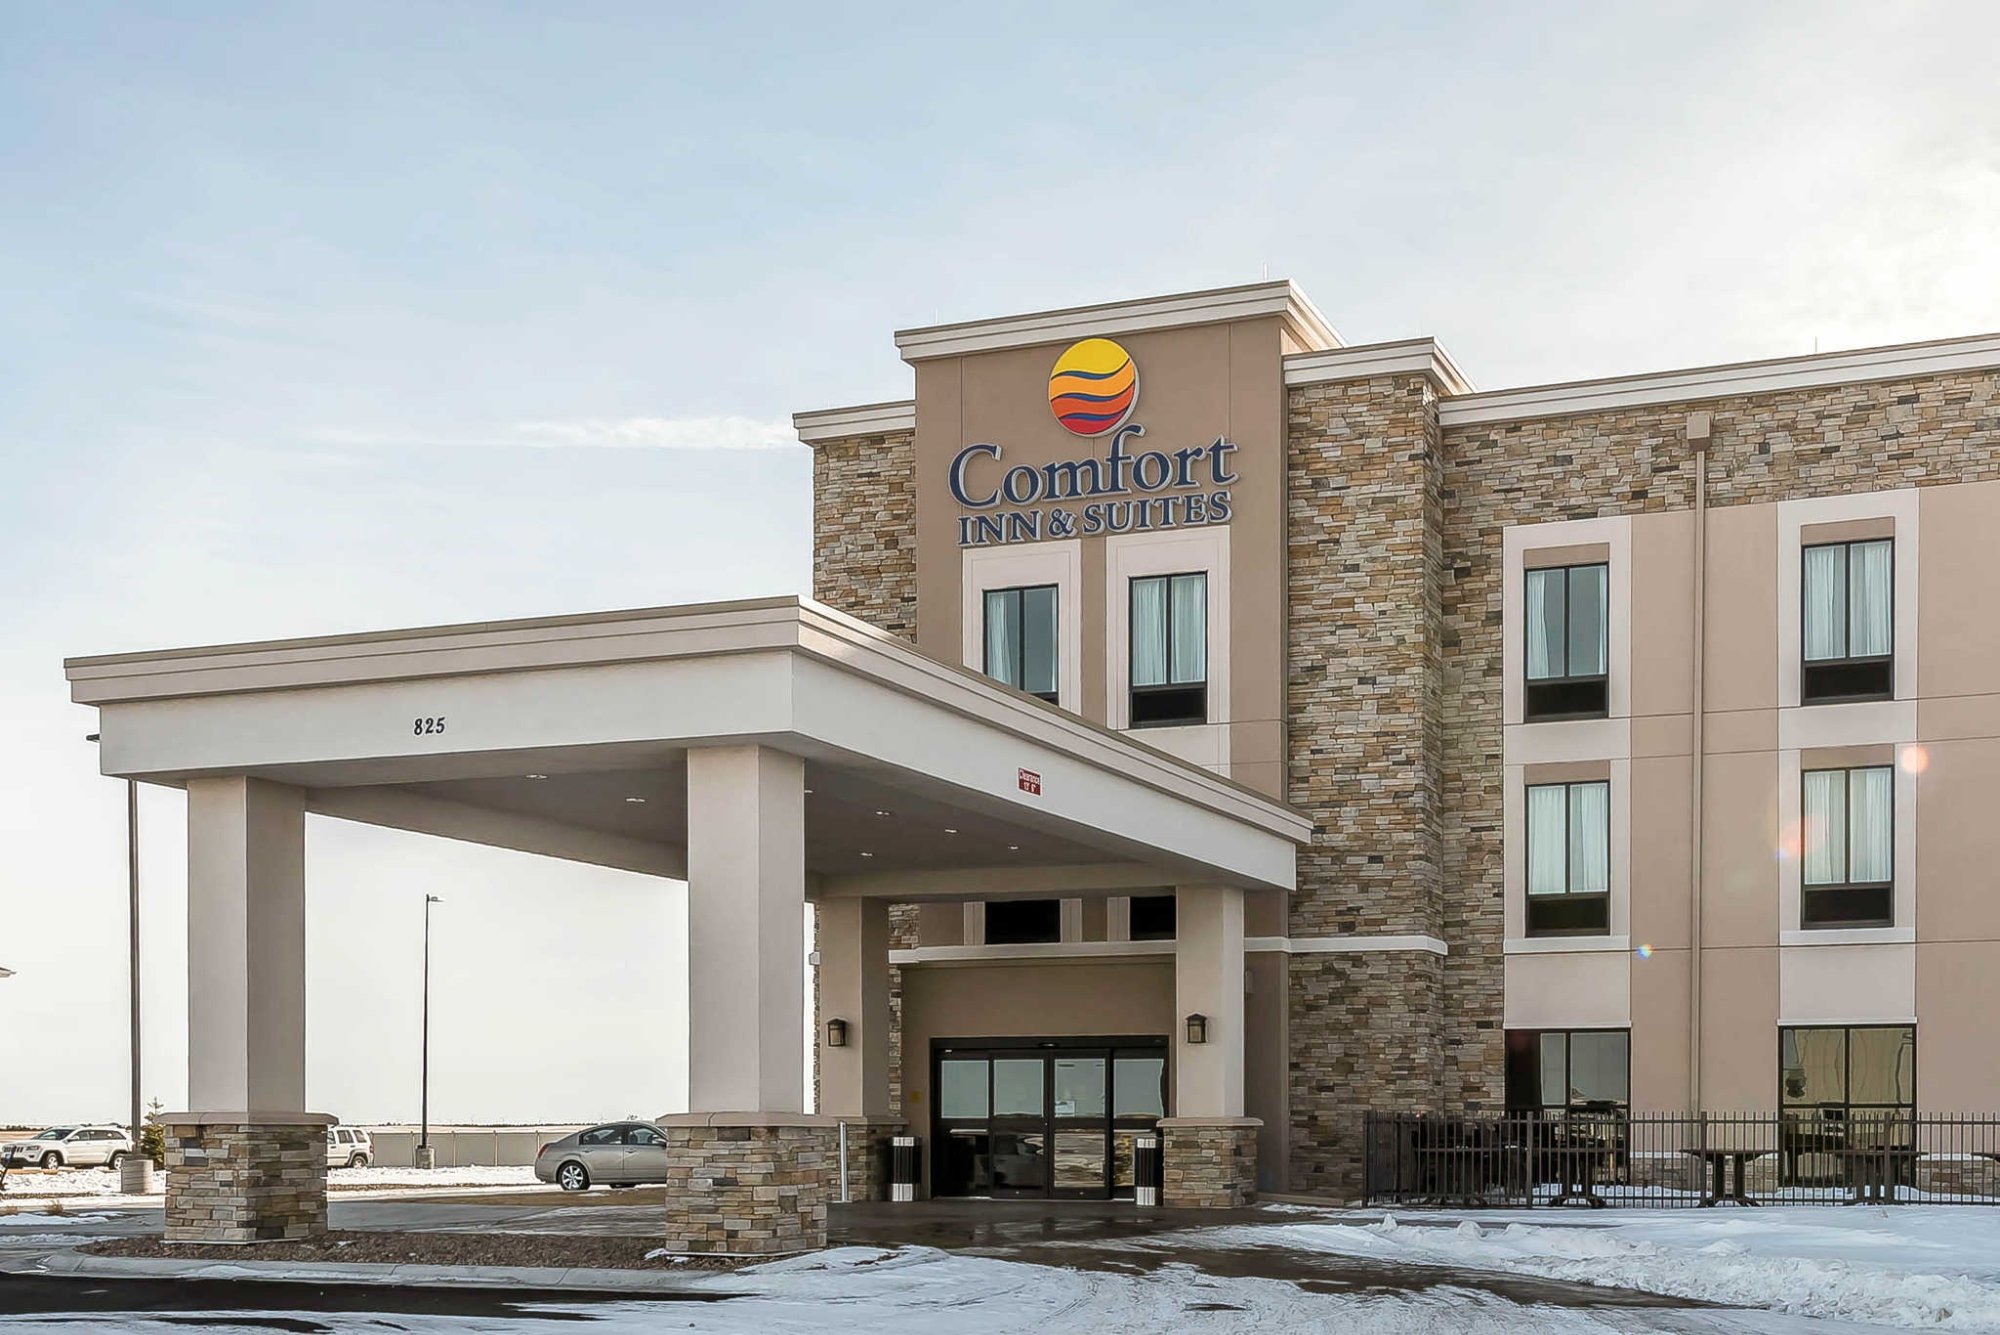 Photo of Comfort Inn & Suites Sidney, Sidney, NE